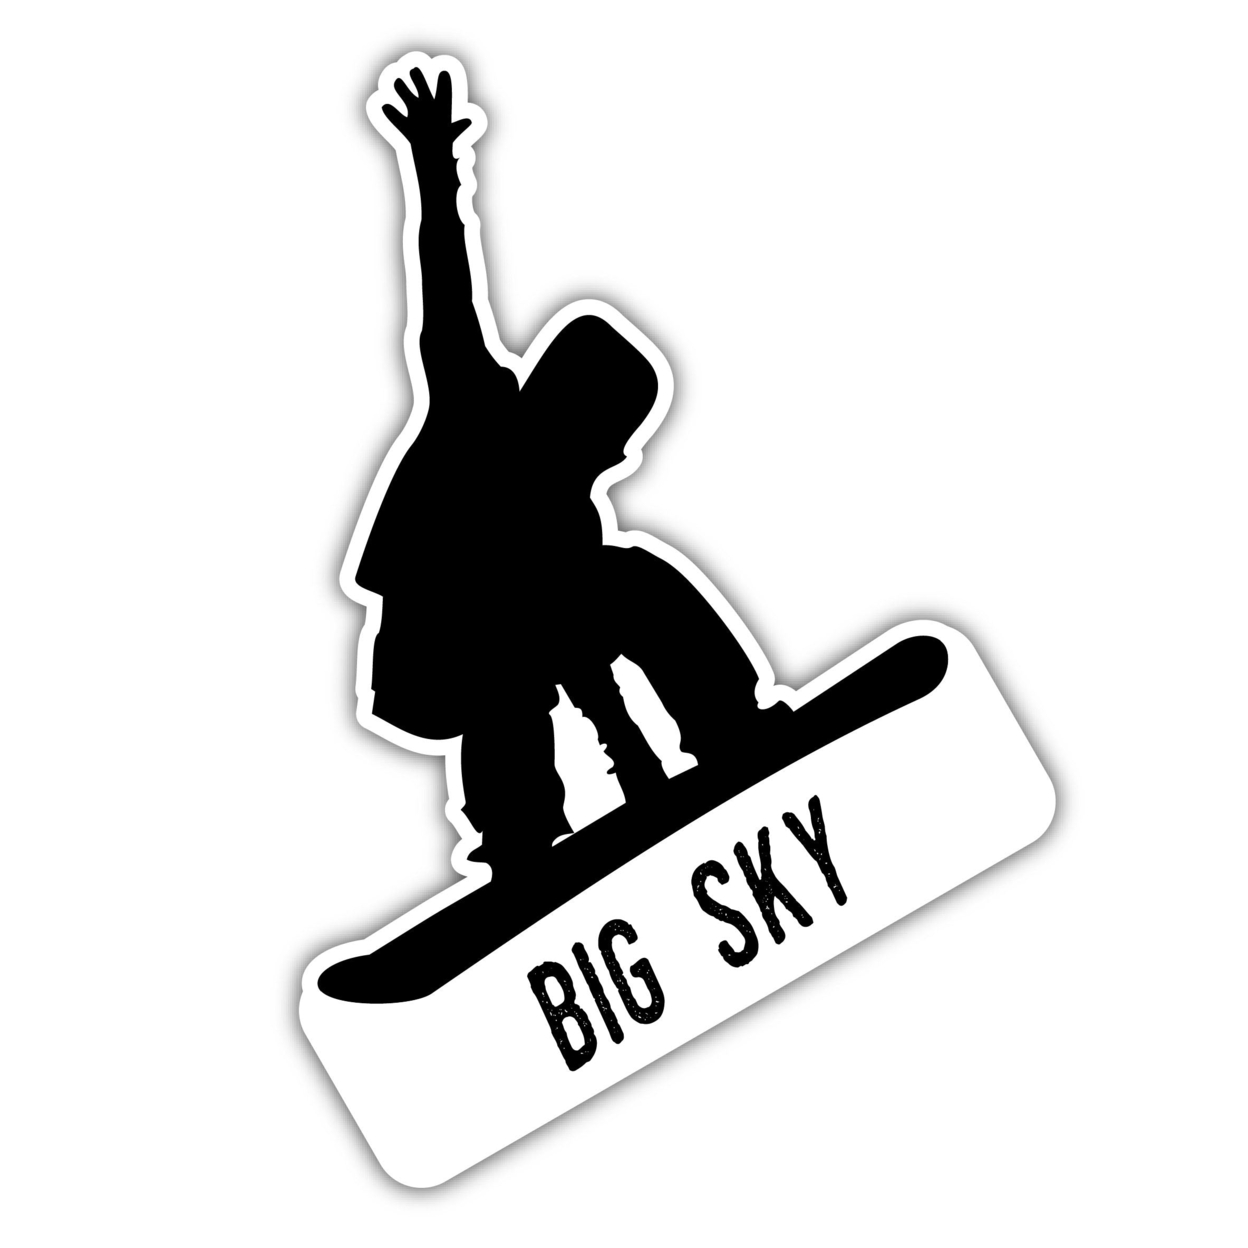 Big Sky Montana Ski Adventures Souvenir Approximately 5 X 2.5-Inch Vinyl Decal Sticker Goggle Design